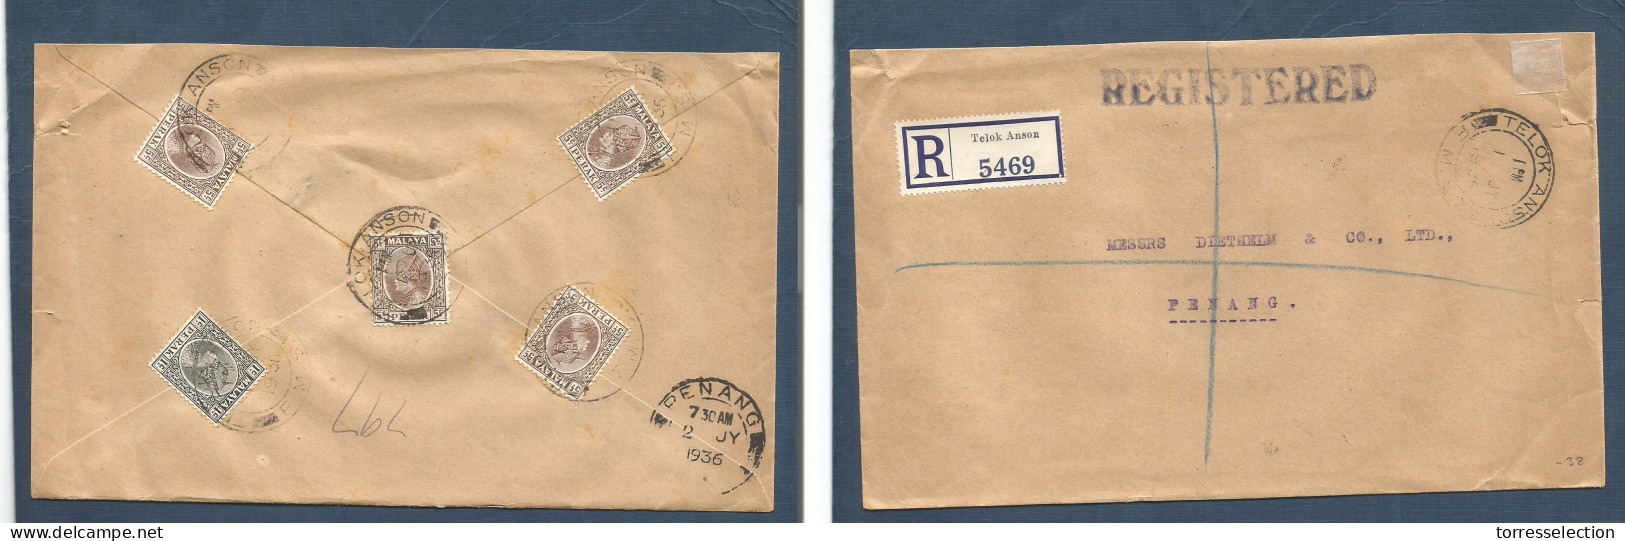 MALAYSIA. 1936 (1 July) Telok Anson - Penang. Via Sing. Registered Reverse Multifkd Perak Issue. VF. XSALE. - Malasia (1964-...)